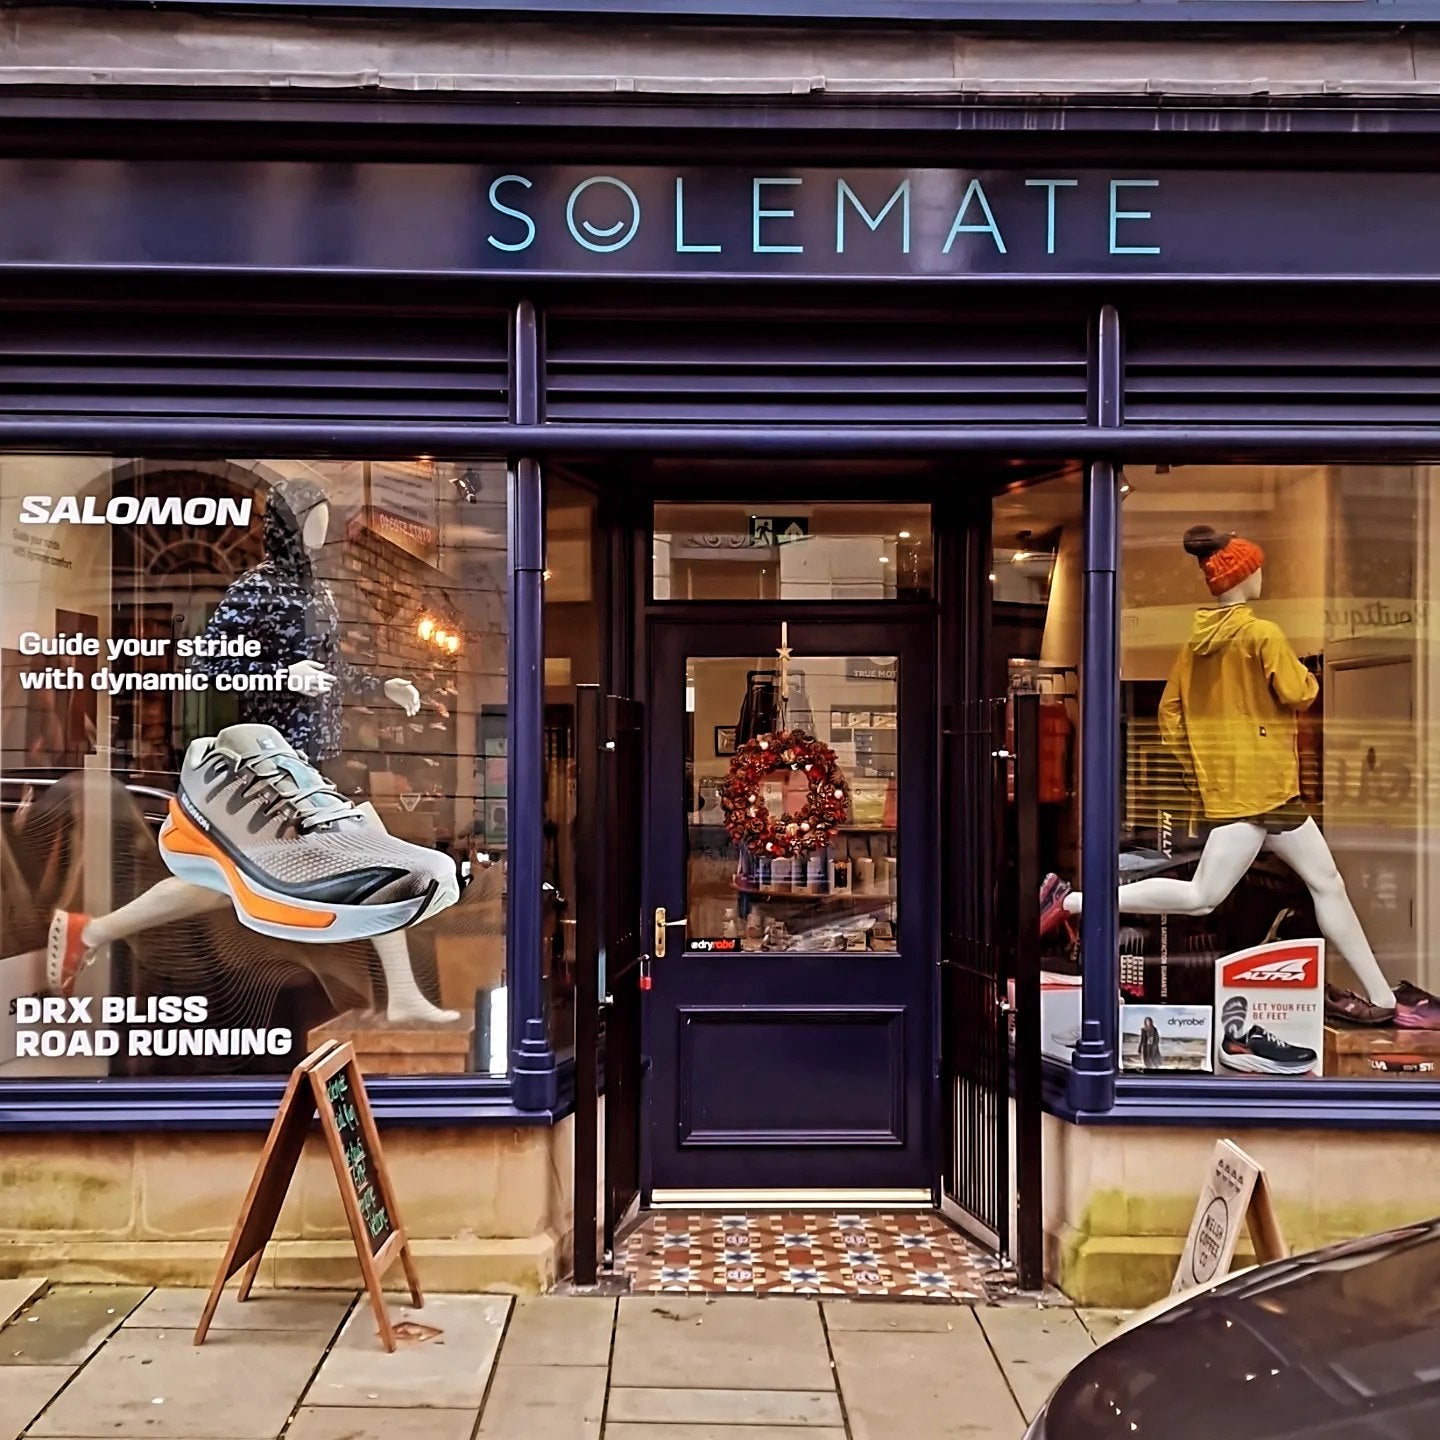 Sole Mate Running Store in Merthyr Tydfil